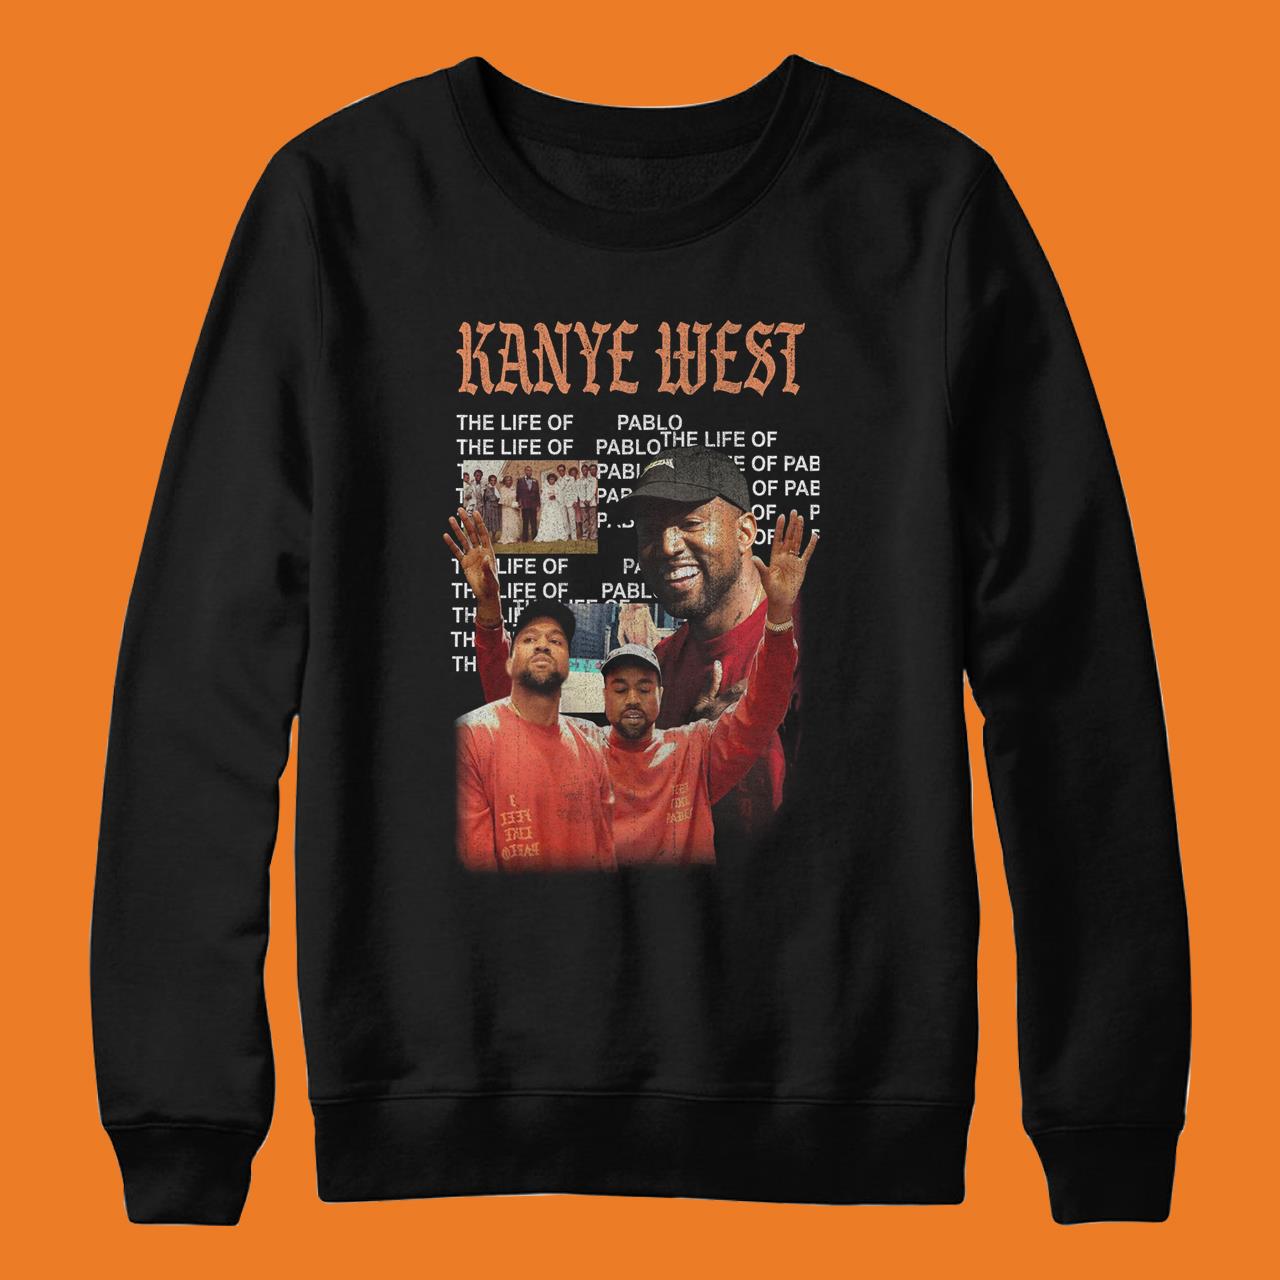 Kanye West The Life Of Pablo T-Shirt